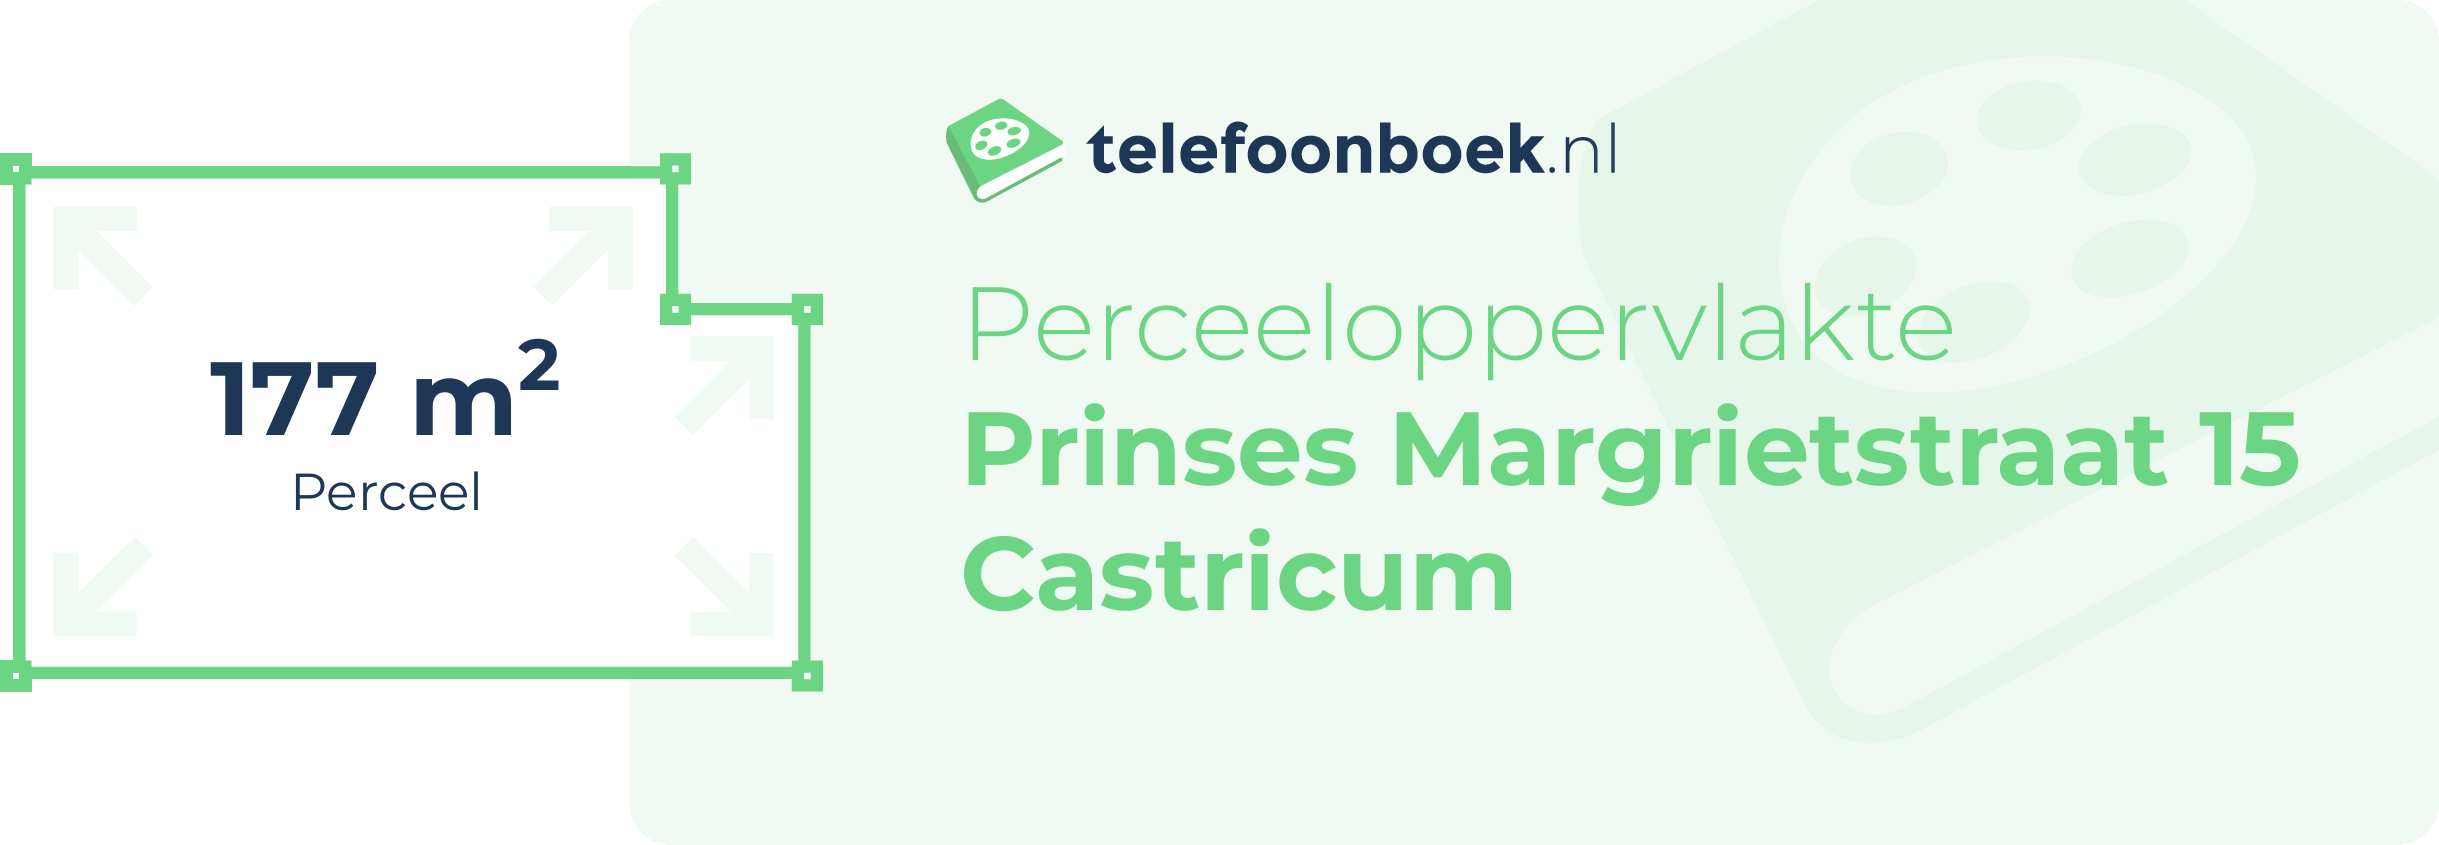 Perceeloppervlakte Prinses Margrietstraat 15 Castricum